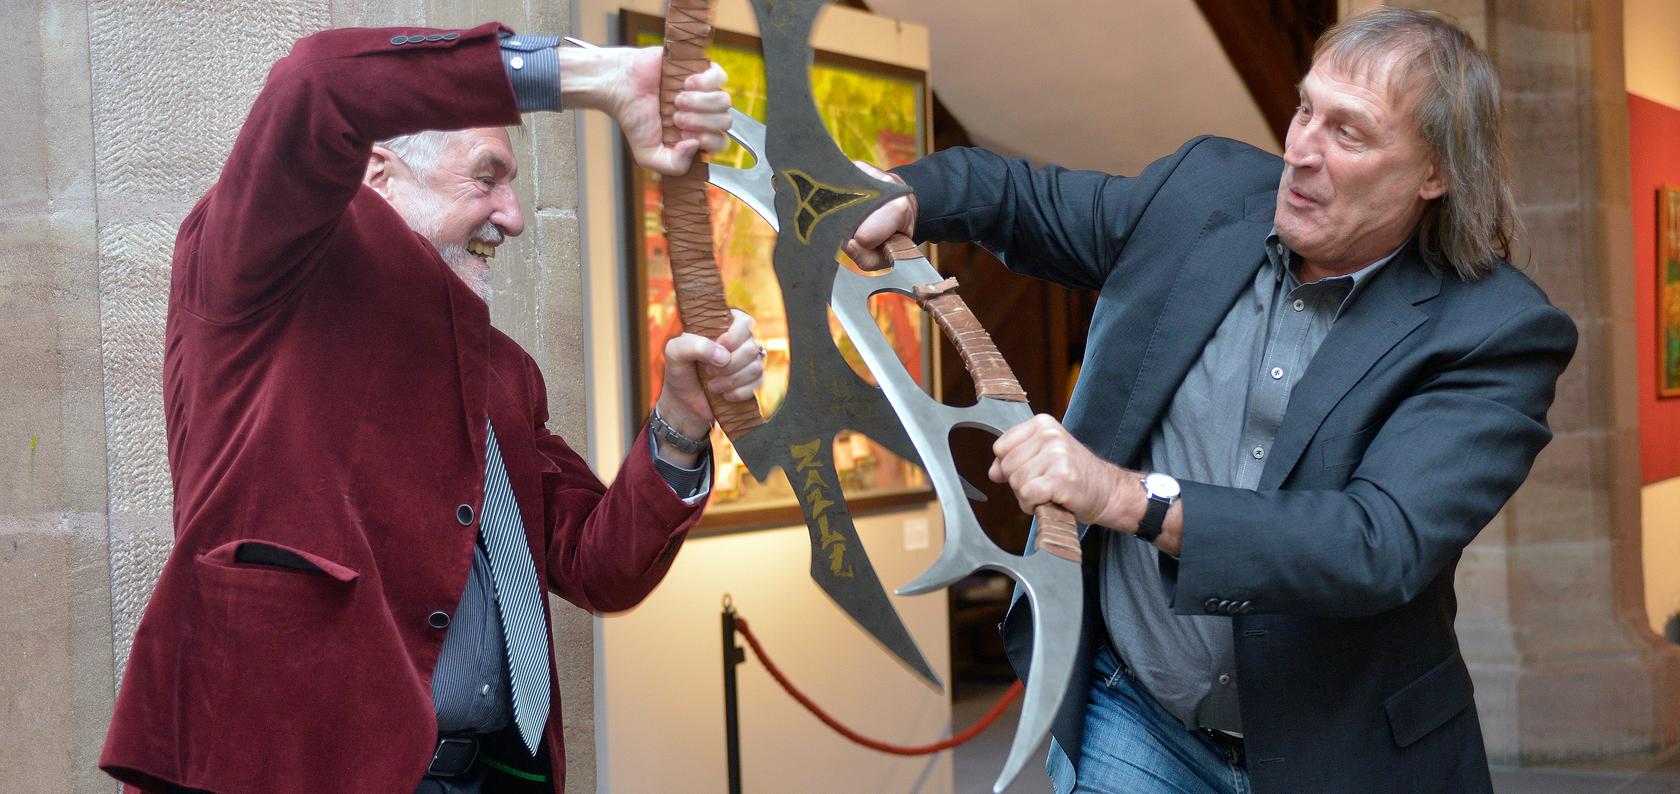 Klingonenschwerter wandern ins Erlanger Stadtmuseum